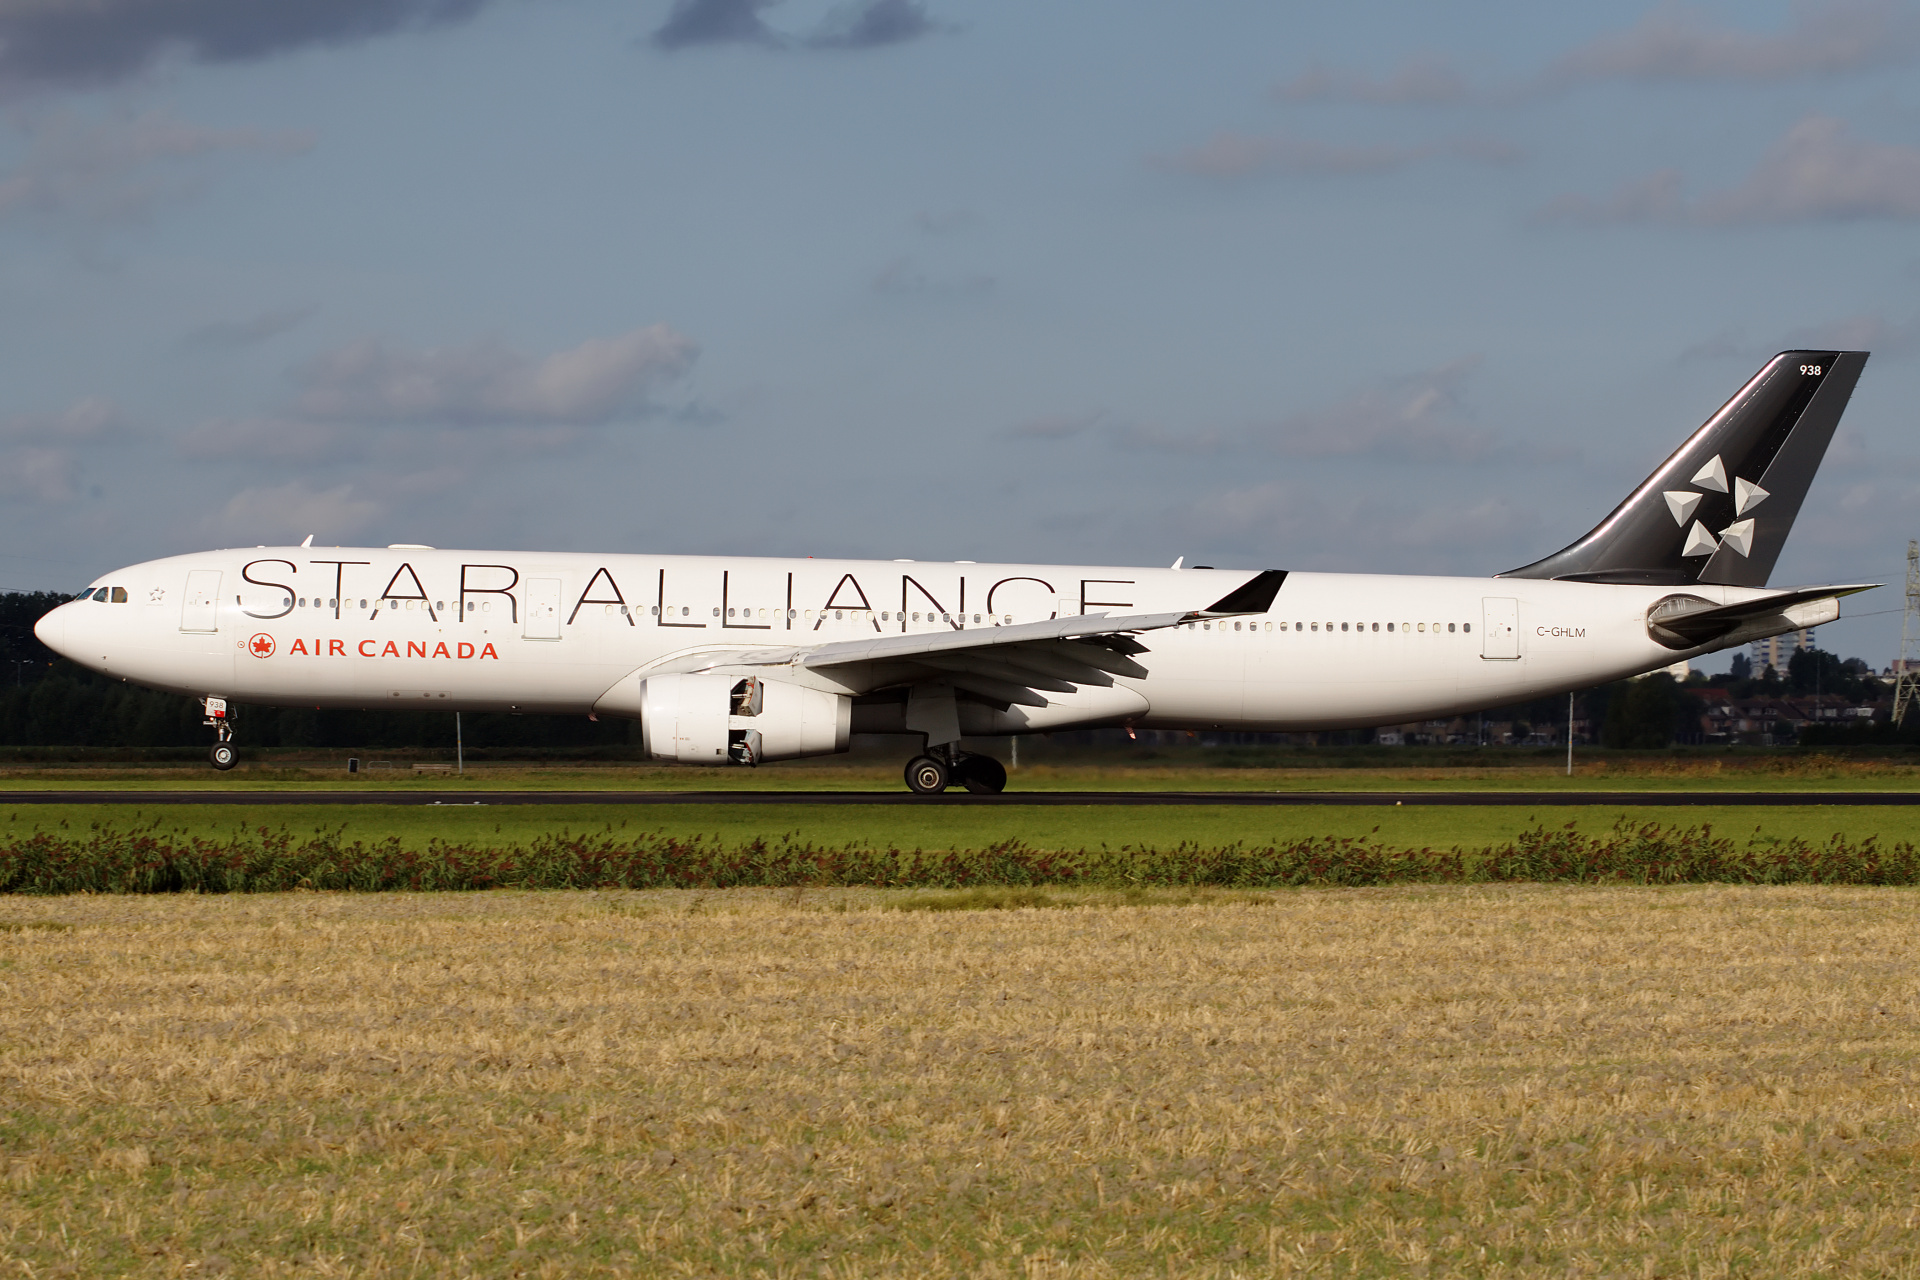 C-GHLM, Air Canada (Star Alliance livery) (Aircraft » Schiphol Spotting » Airbus A330-300)